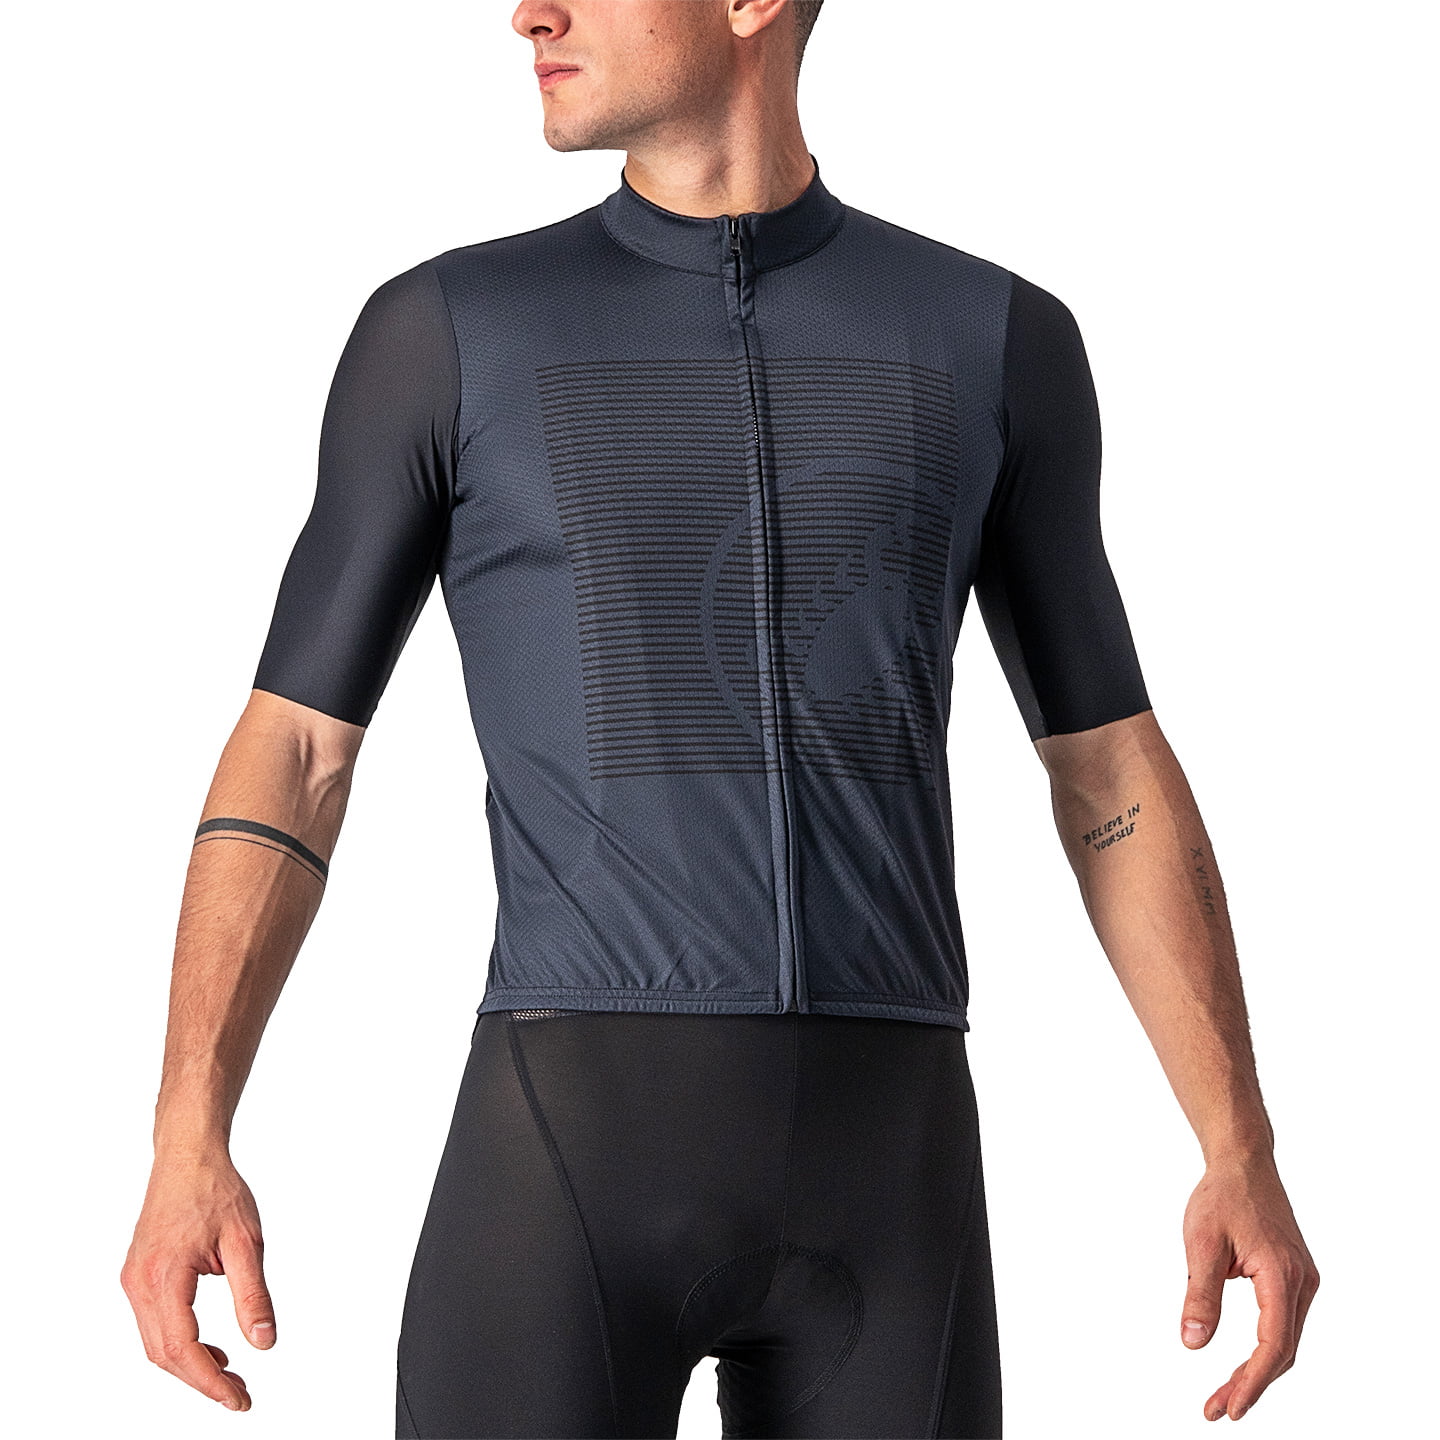 CASTELLI Bagarre Short Sleeve Jersey Short Sleeve Jersey, for men, size M, Cycling jersey, Cycling clothing